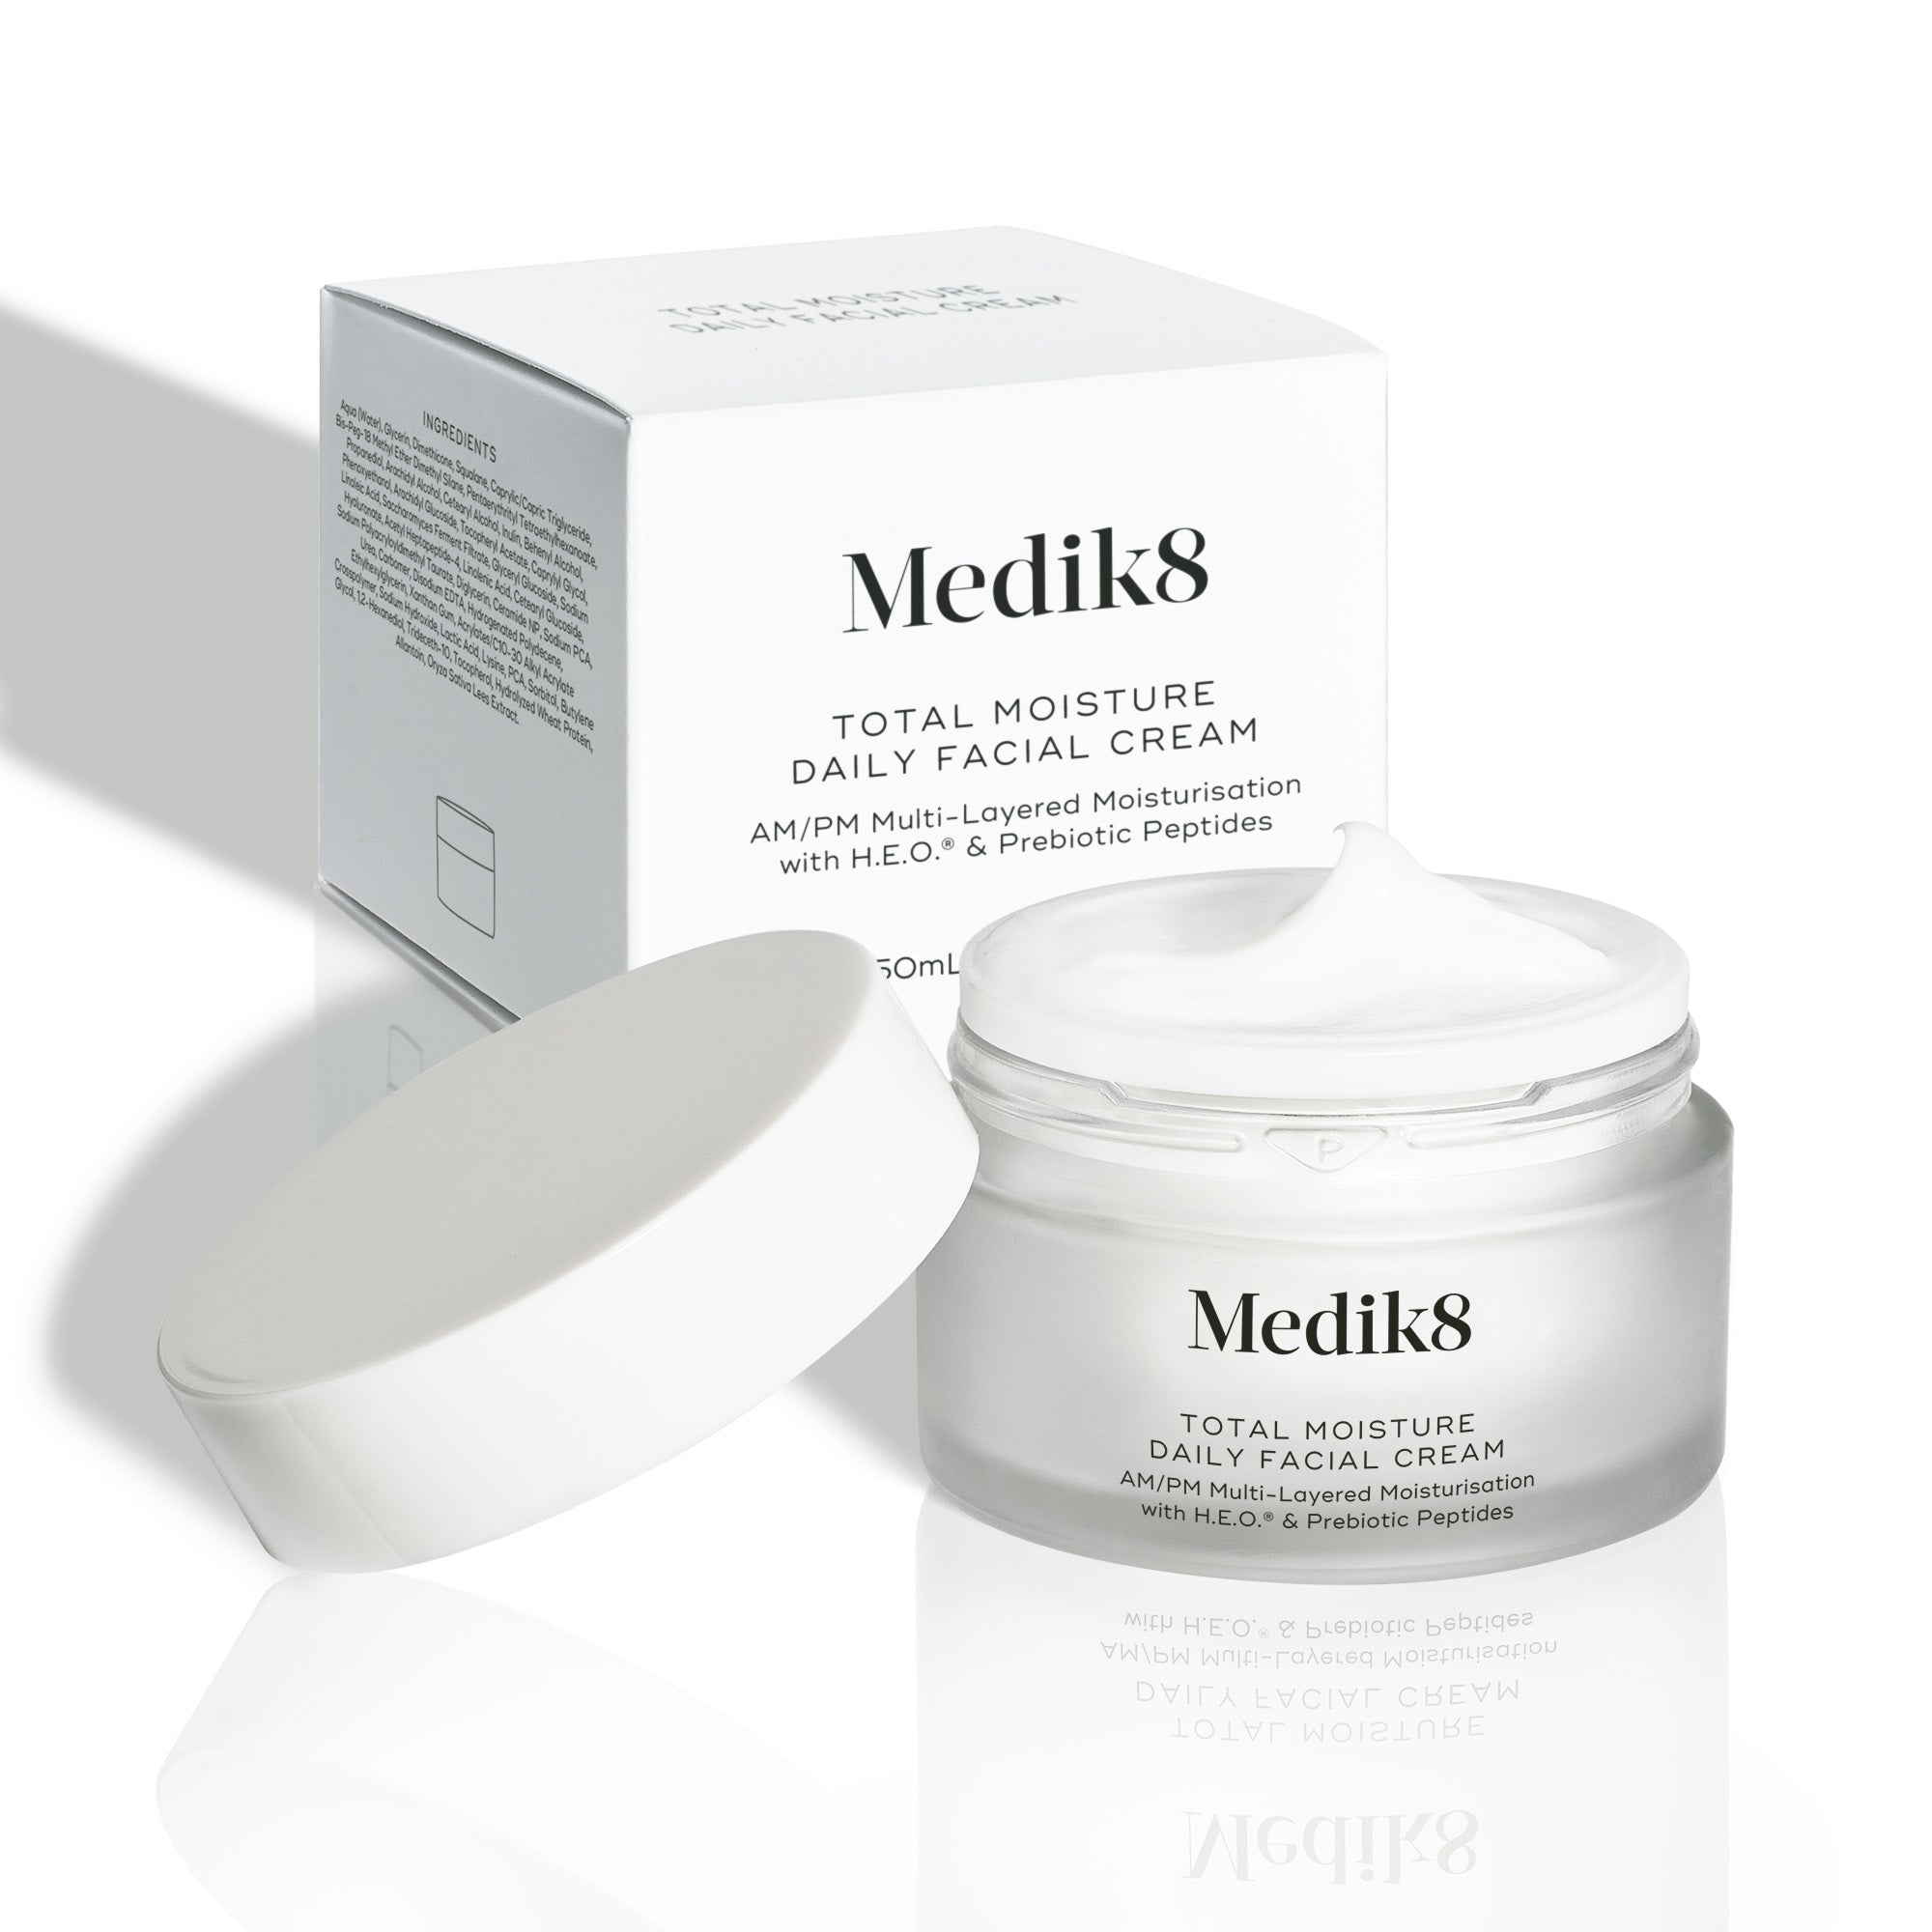 Medik8 Total Moisture Daily Facial Cream caja y producto